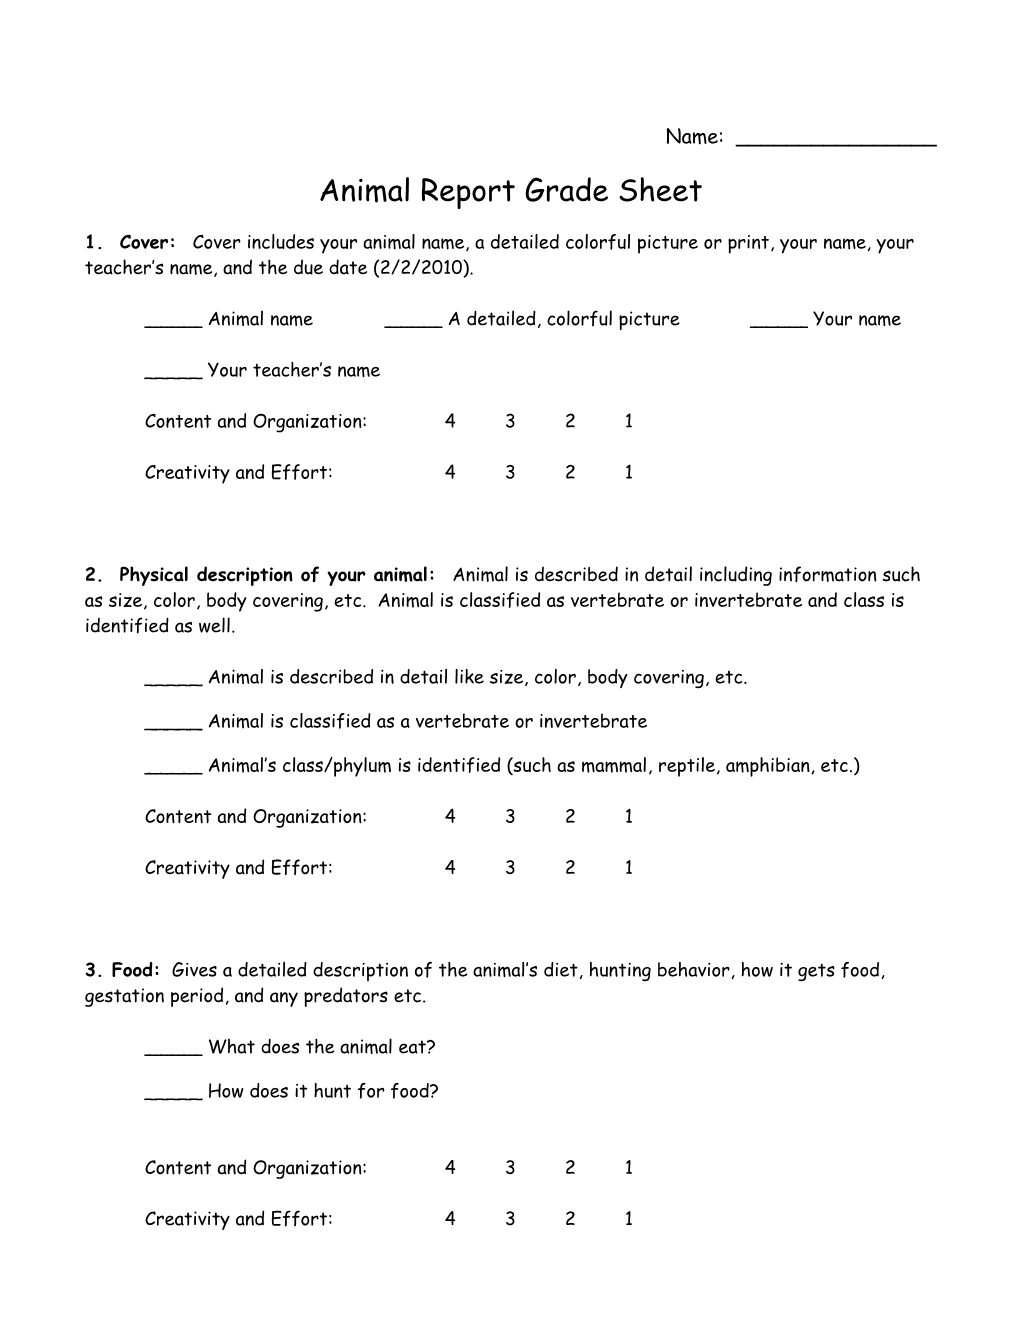 Animal Report Project Grade Sheet